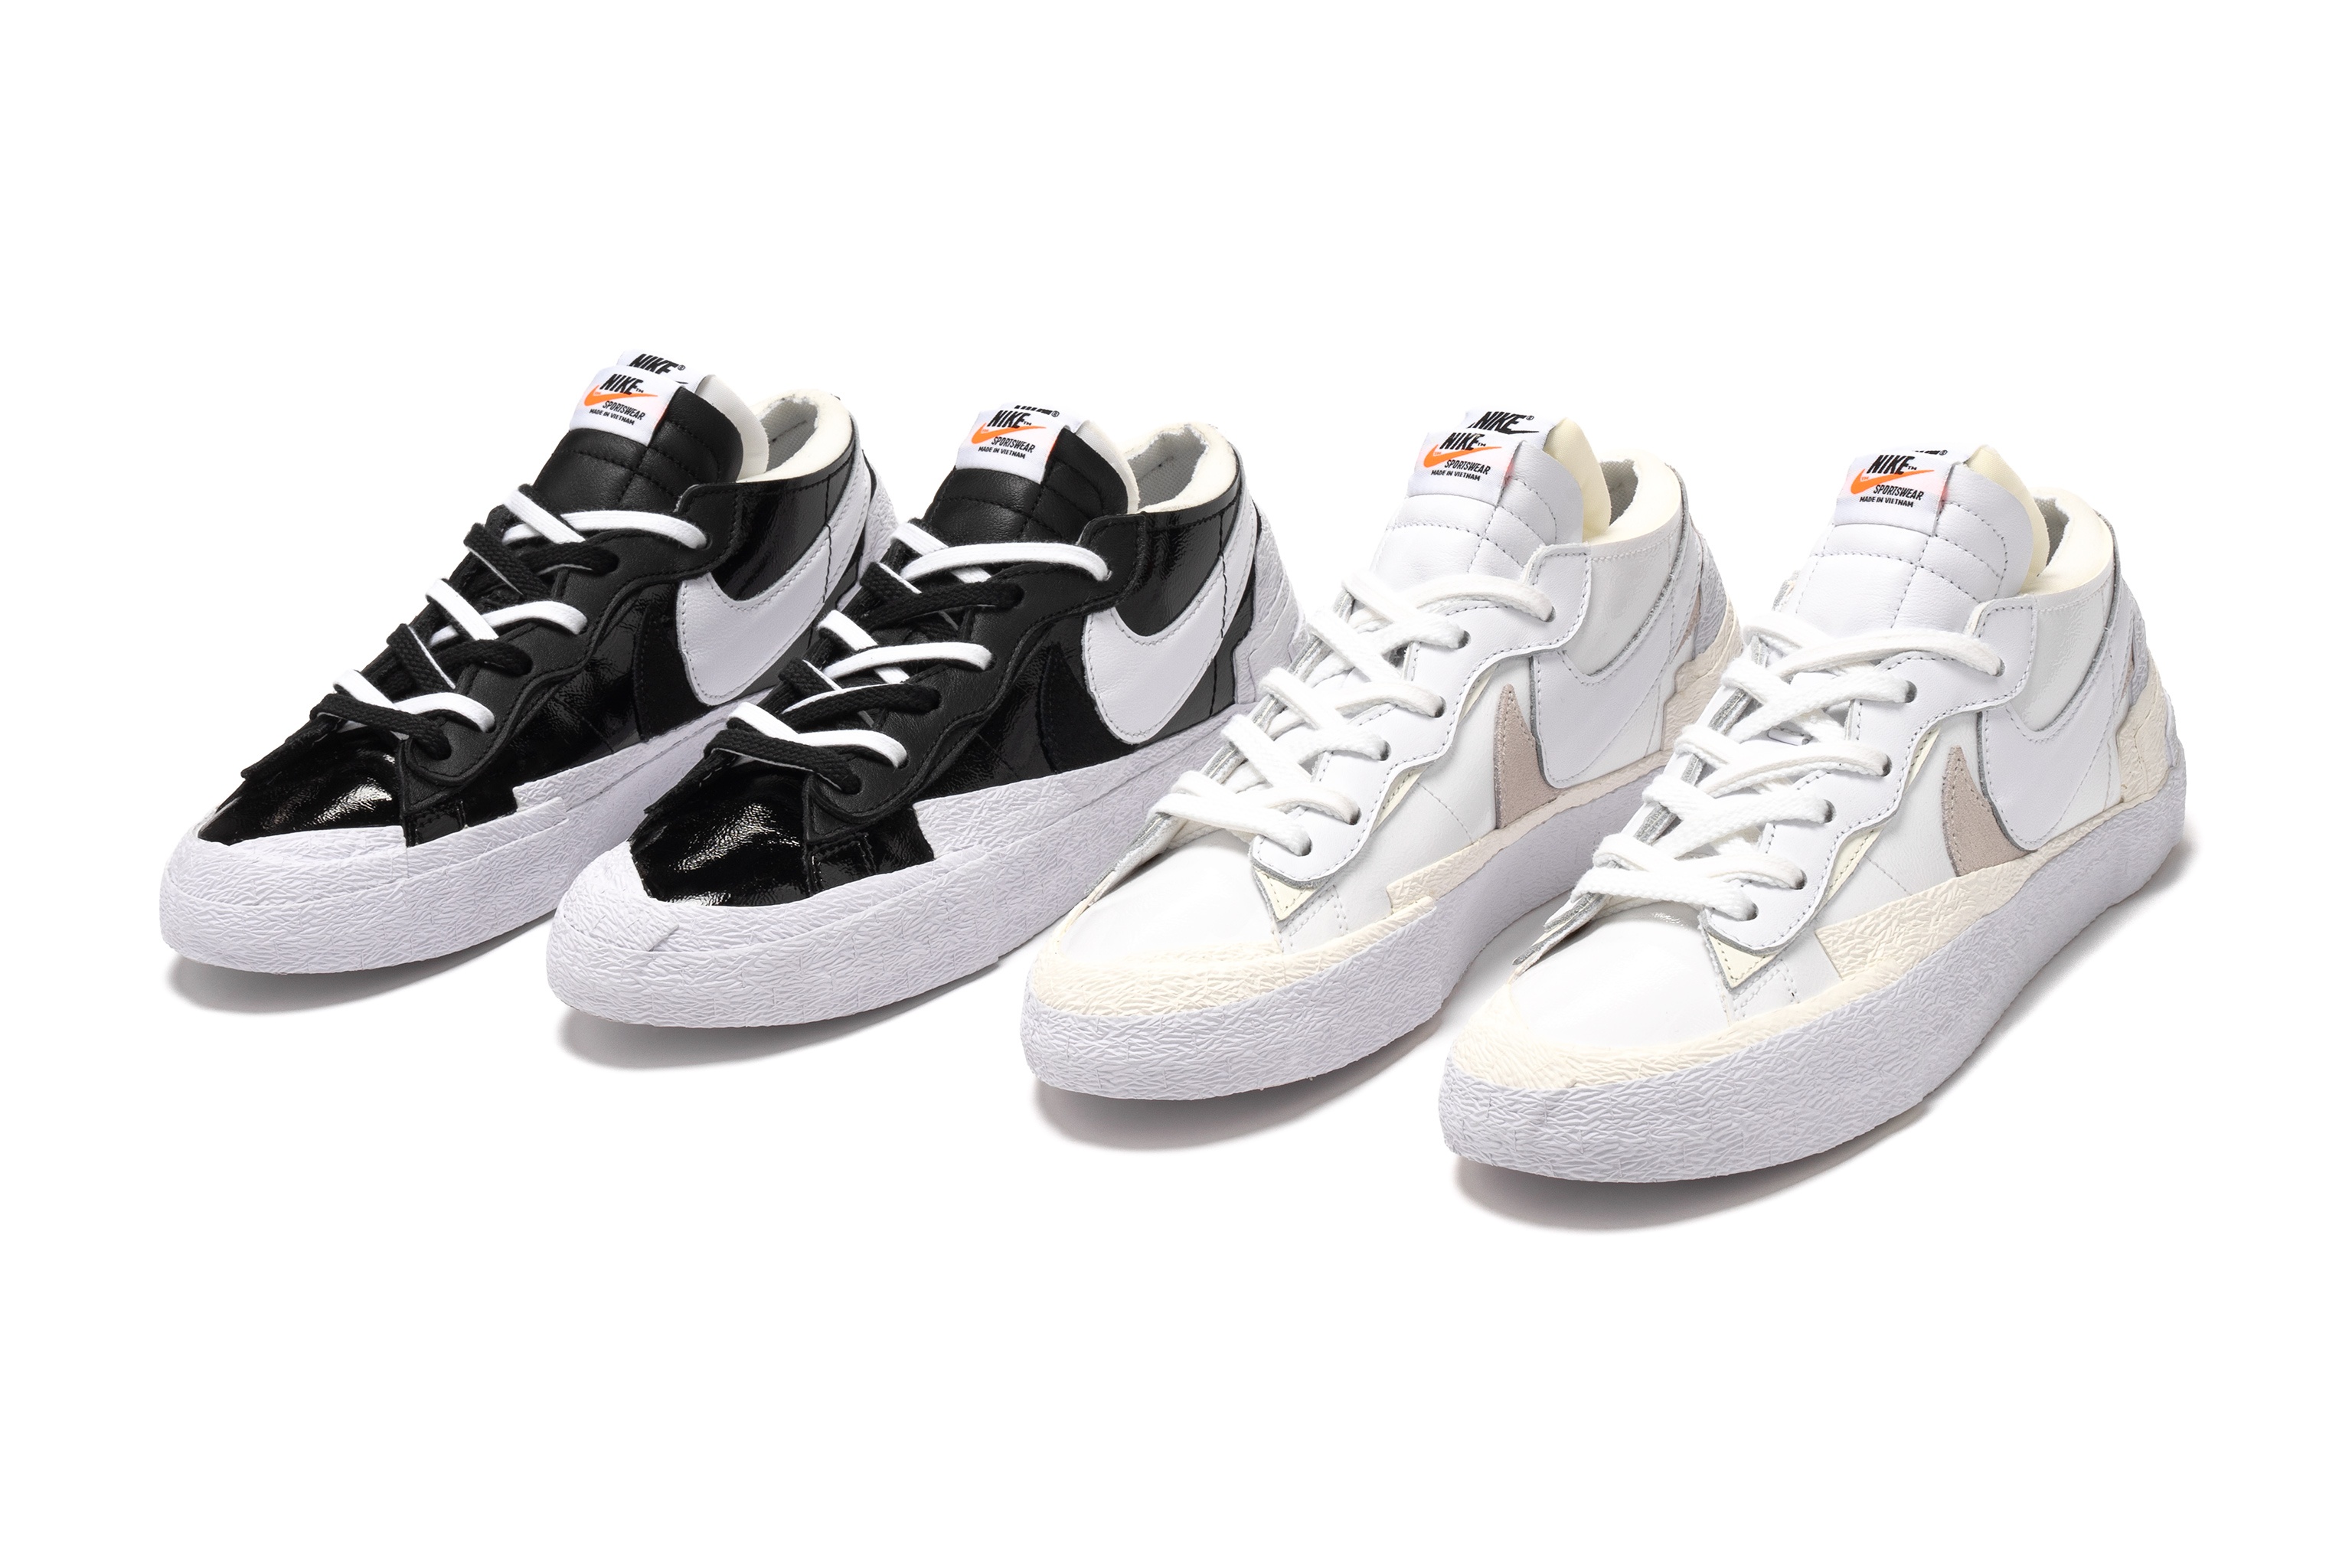 Nike x Sacai Blazer Low 'Black/White' & 'White/Sail' Release Date: 03.31.22 | HAVEN